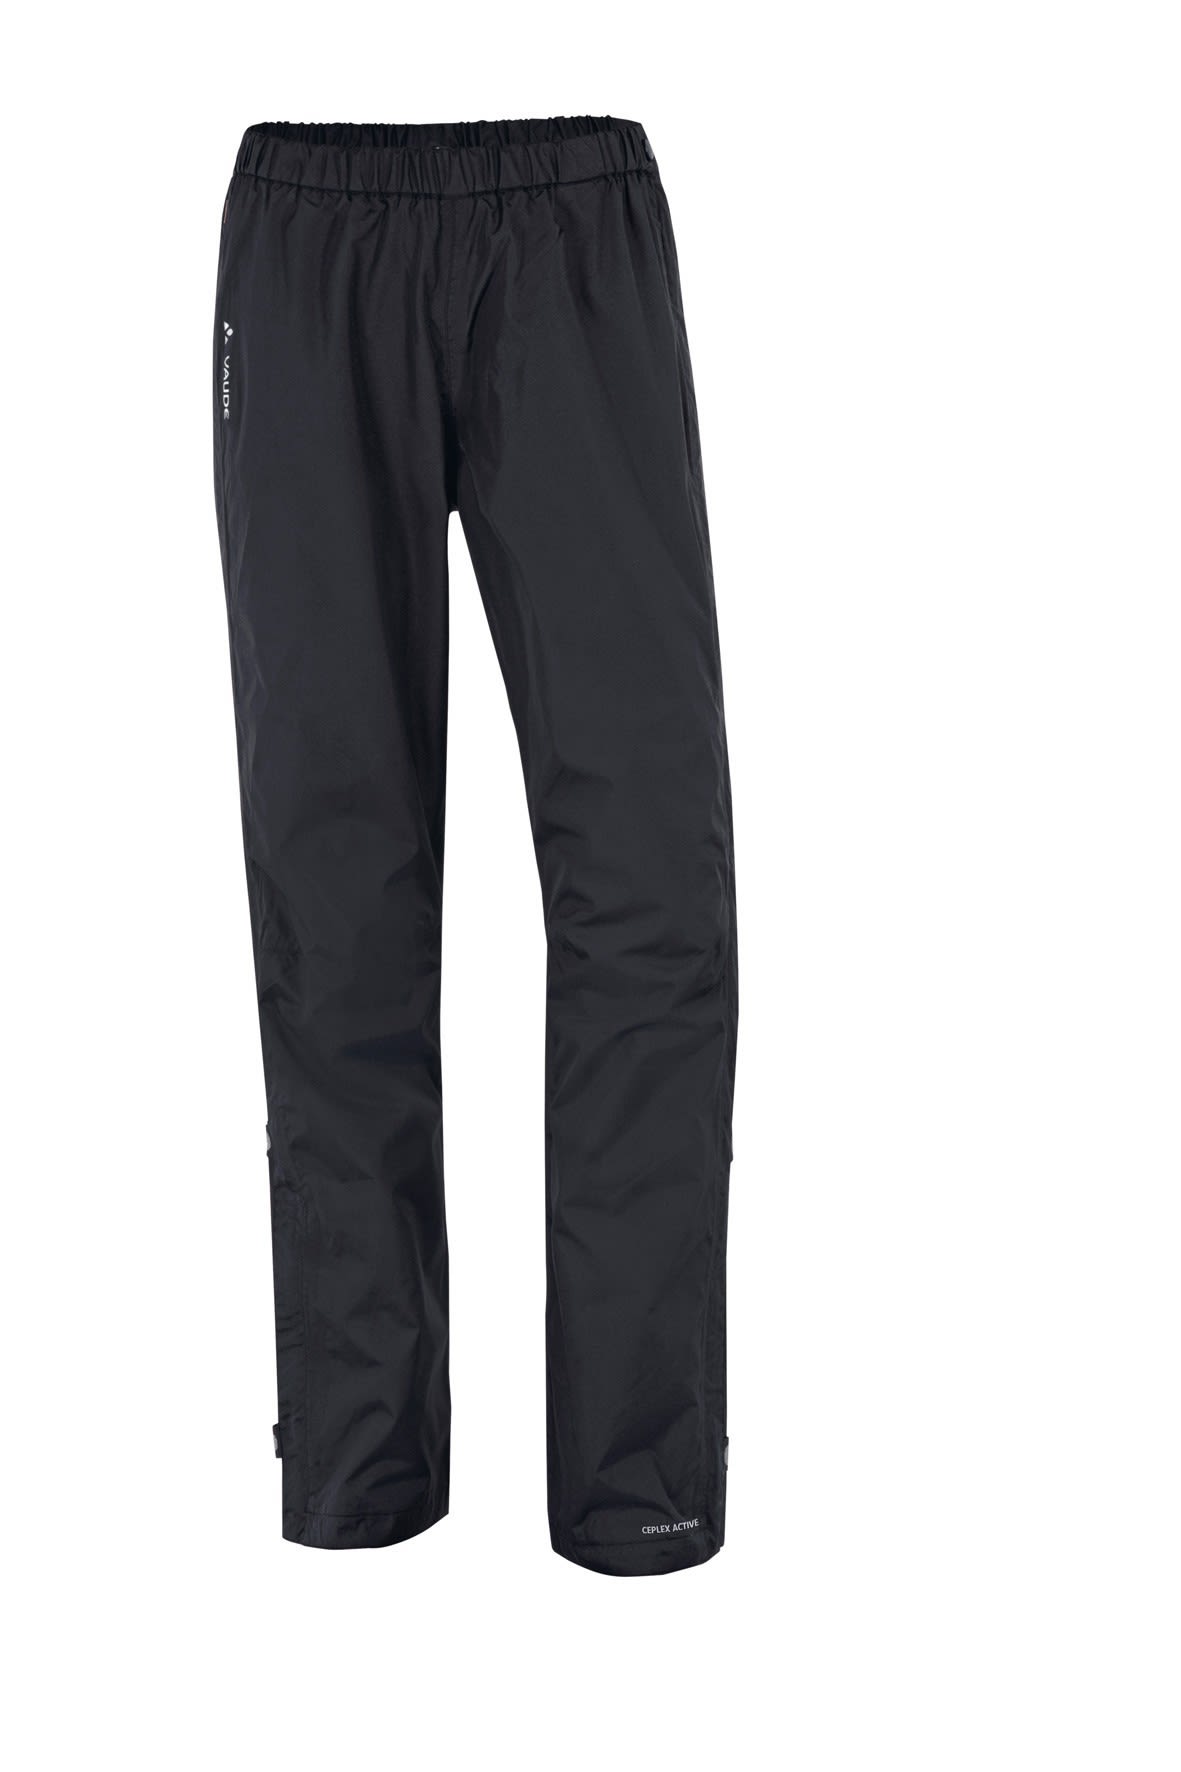 Vaude Fluid Full-Zip Pants Schwarz- Female Hosen- Grsse 34 - Farbe Black